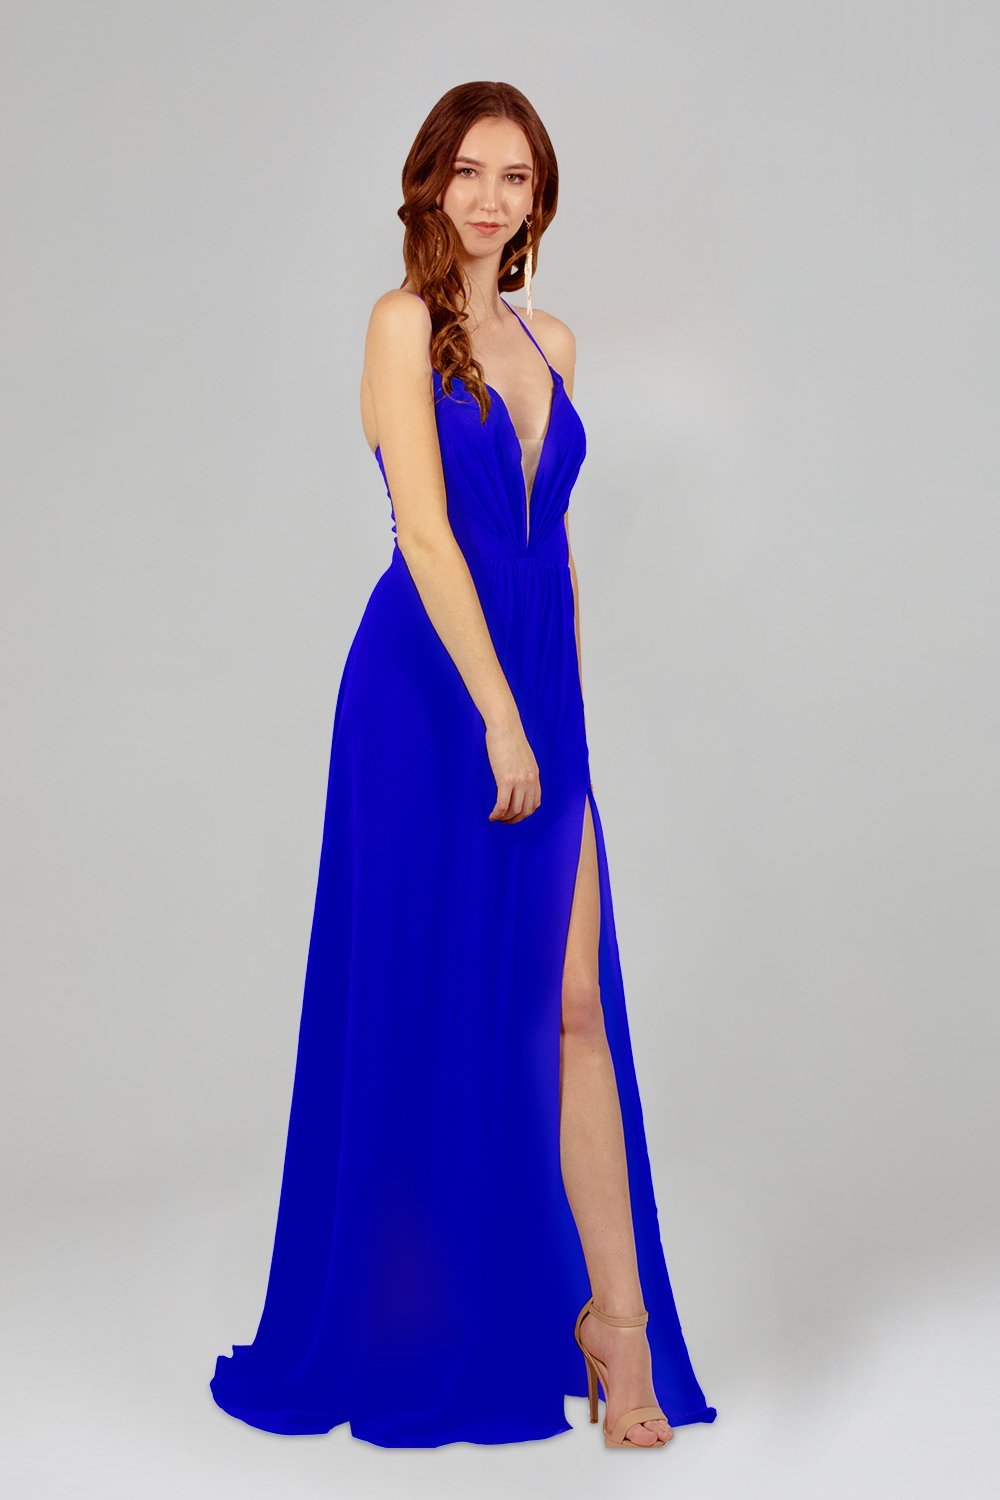 cobalt blue bridesmaid dresses perth australia online envious bridal & formal